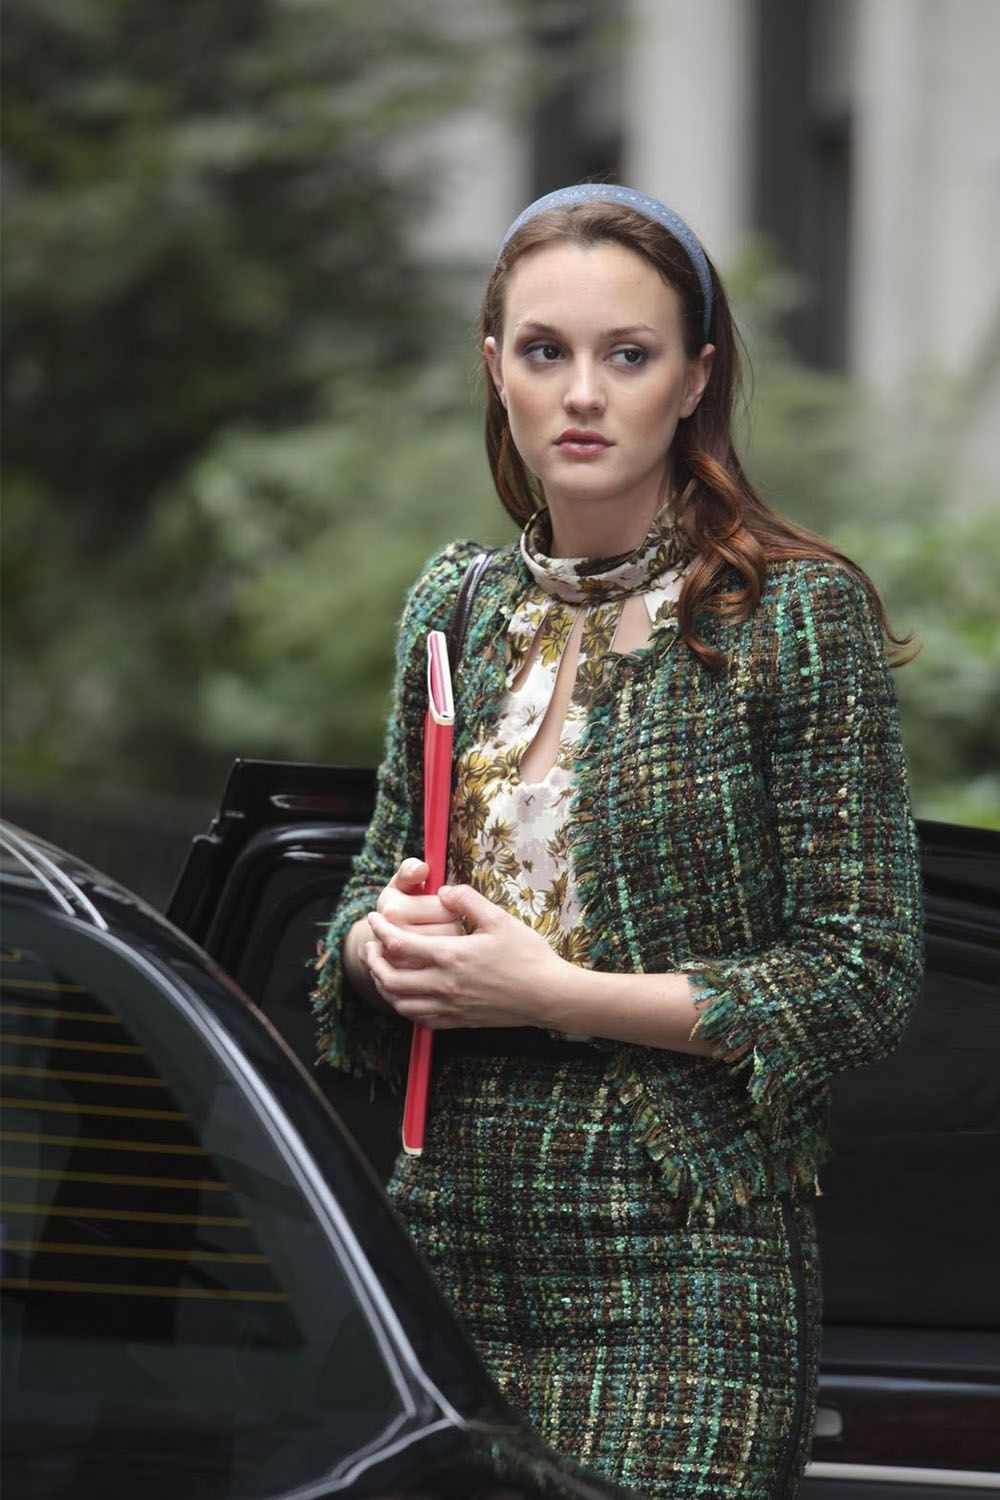 Gossip Girl: Season 3 Episode 17 Blair's metallic dress